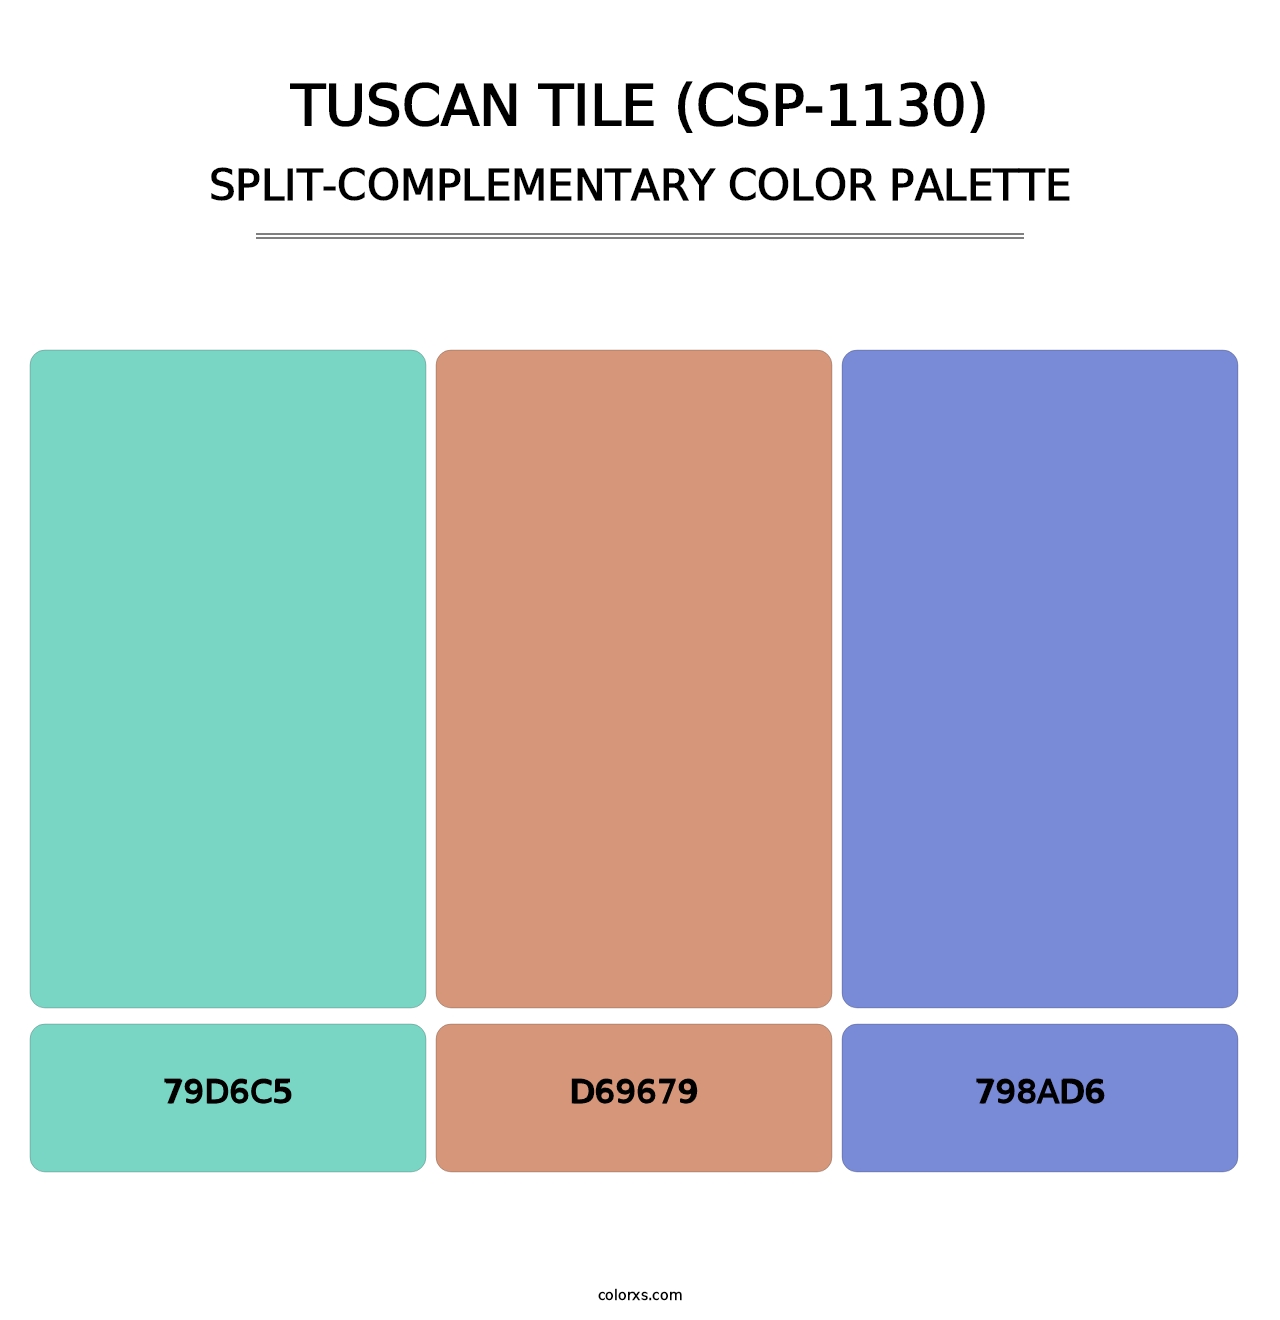 Tuscan Tile (CSP-1130) - Split-Complementary Color Palette